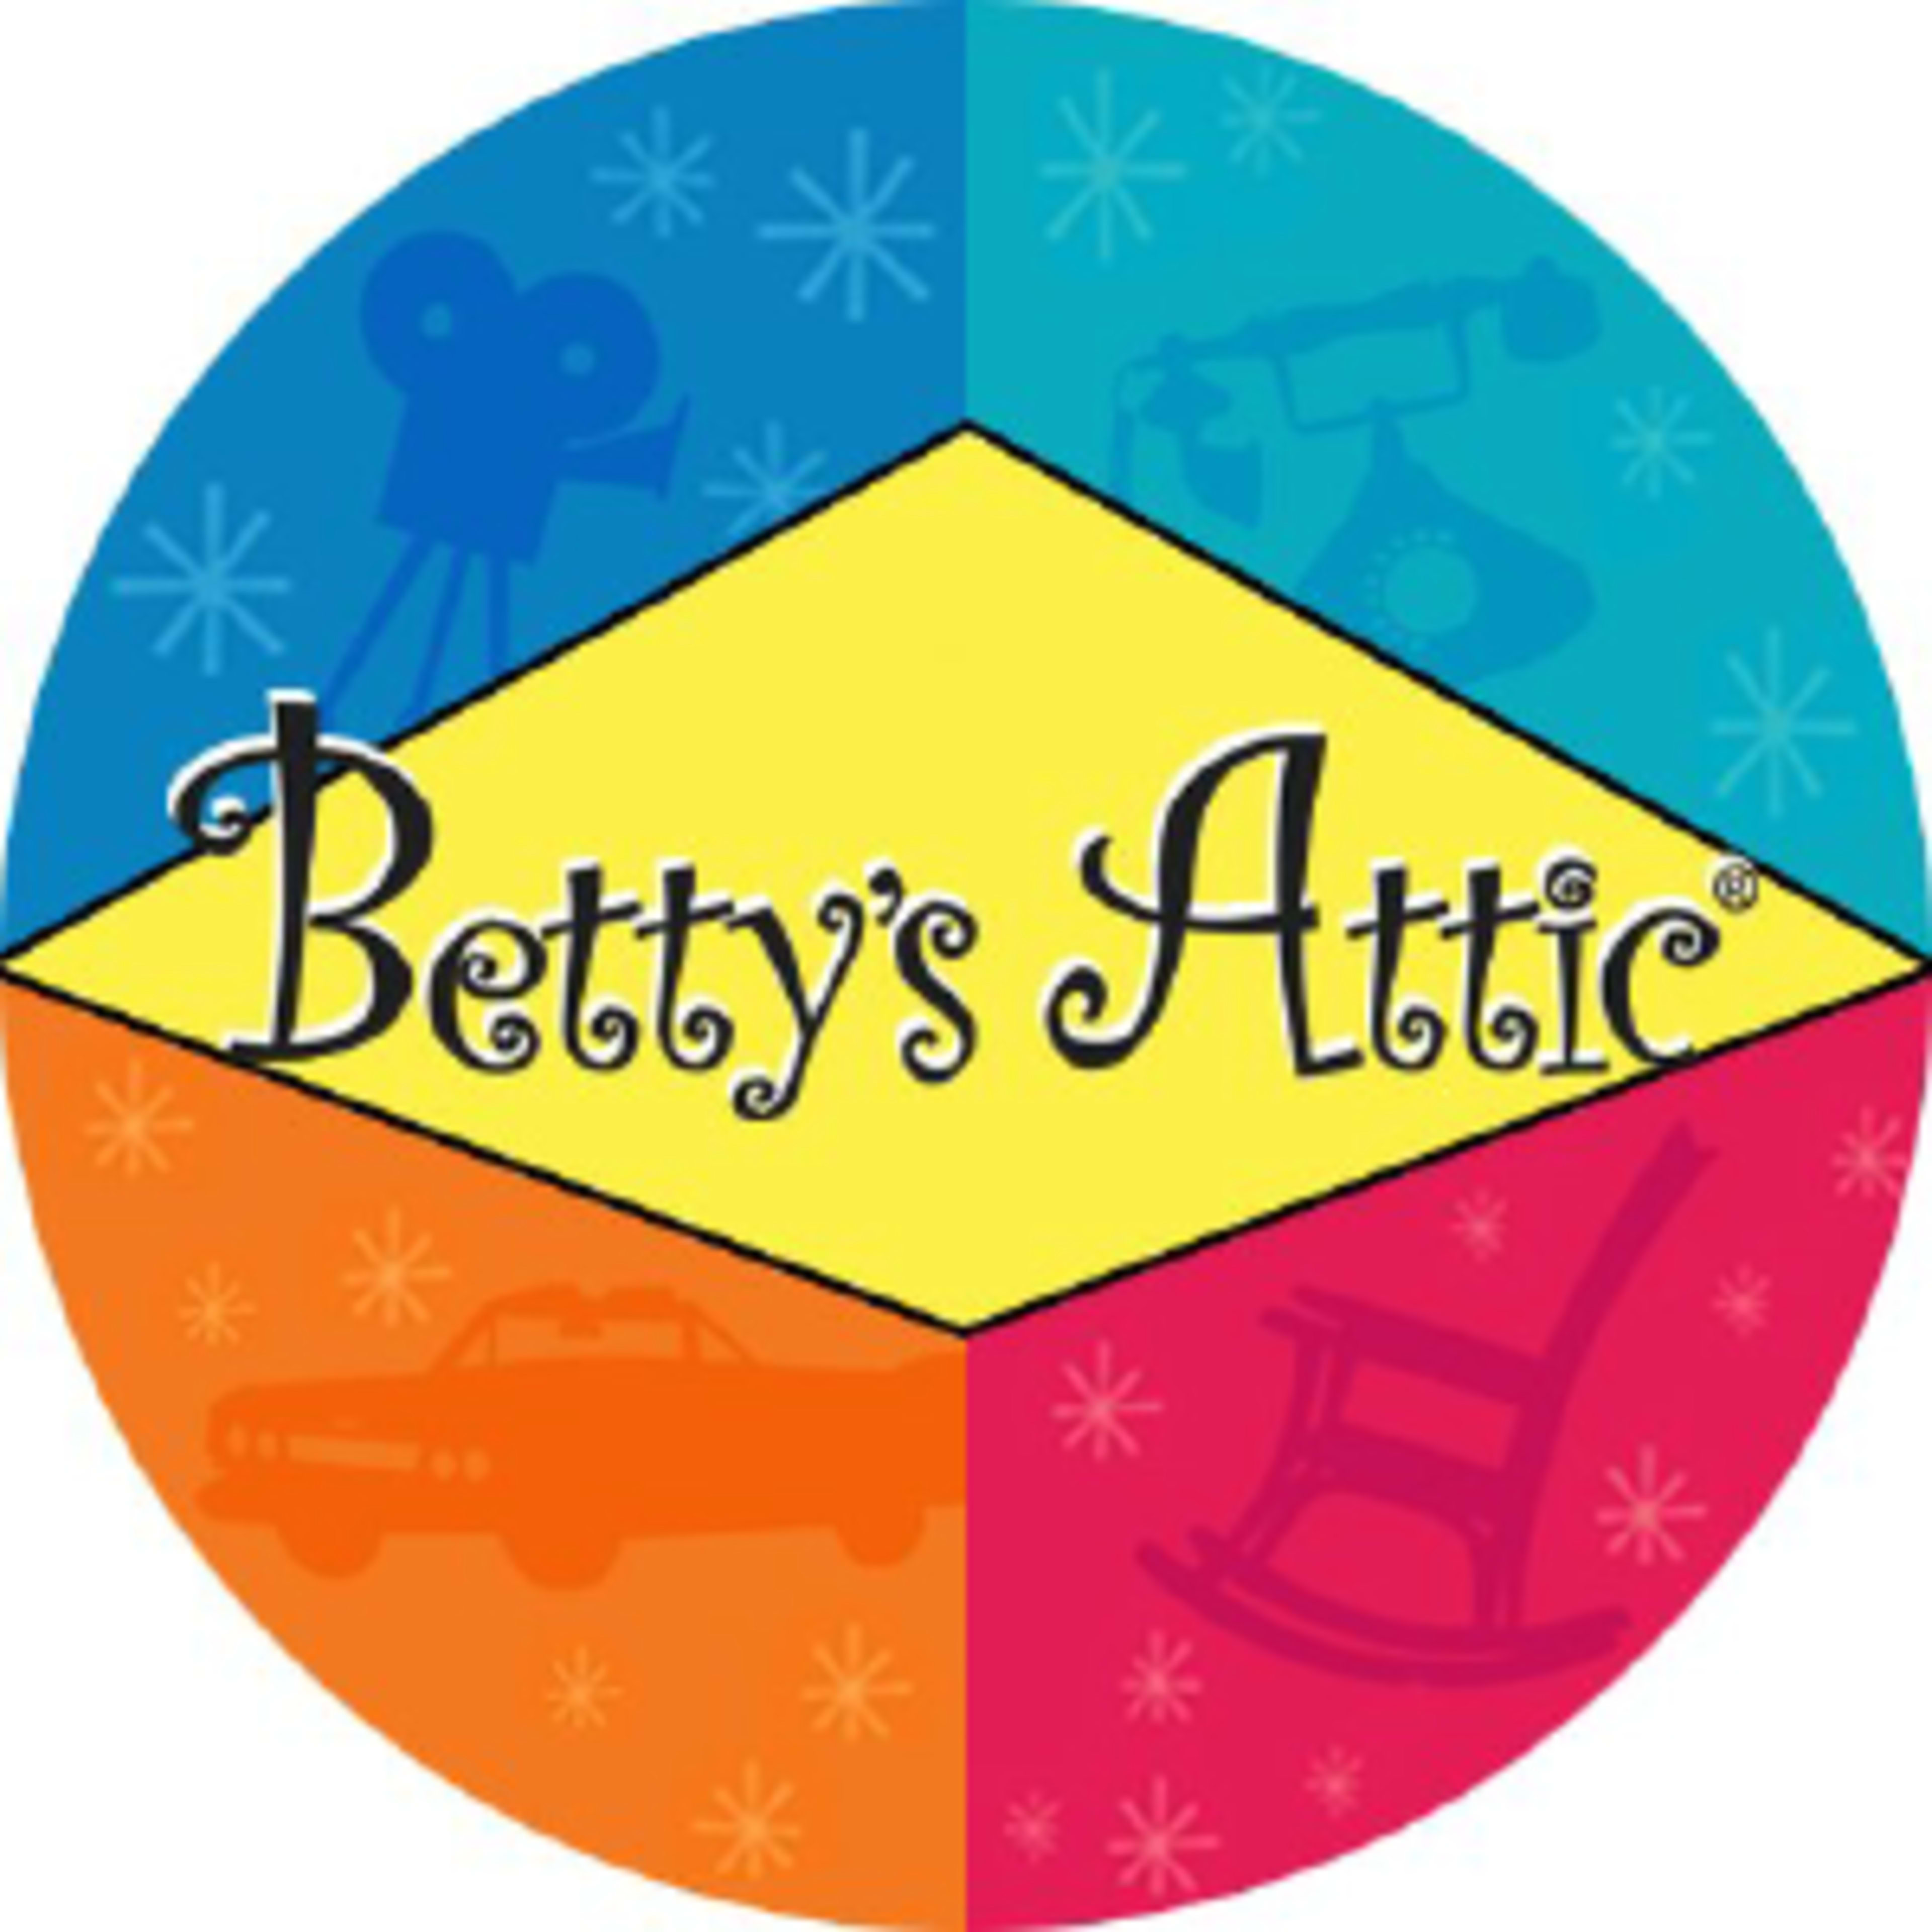 Bettys Attic Code